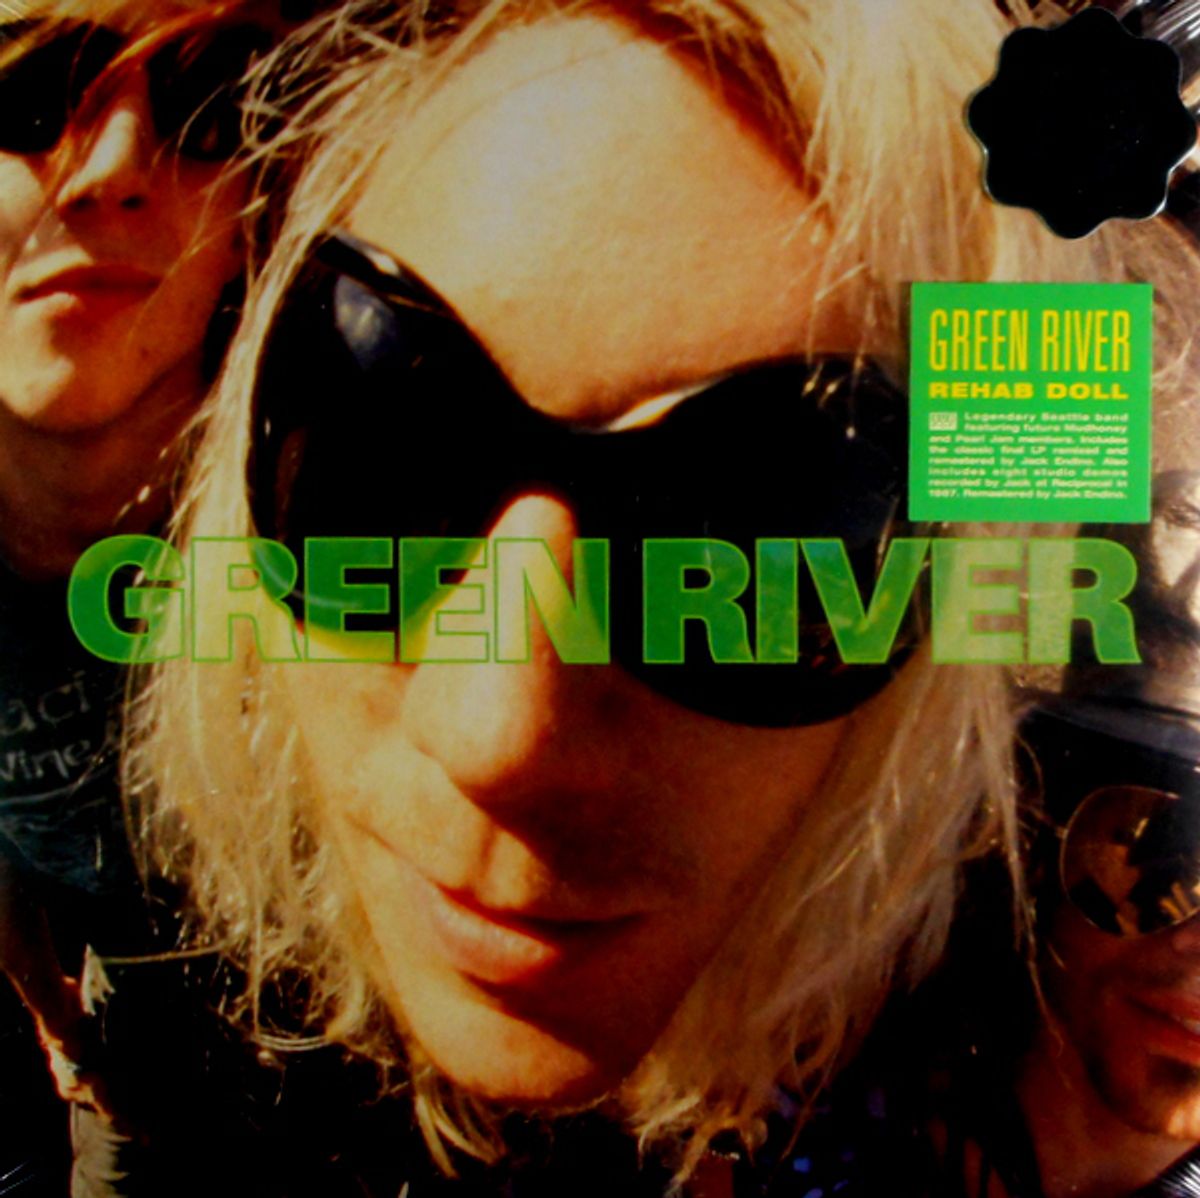 Green River - 'Rehab Doll'